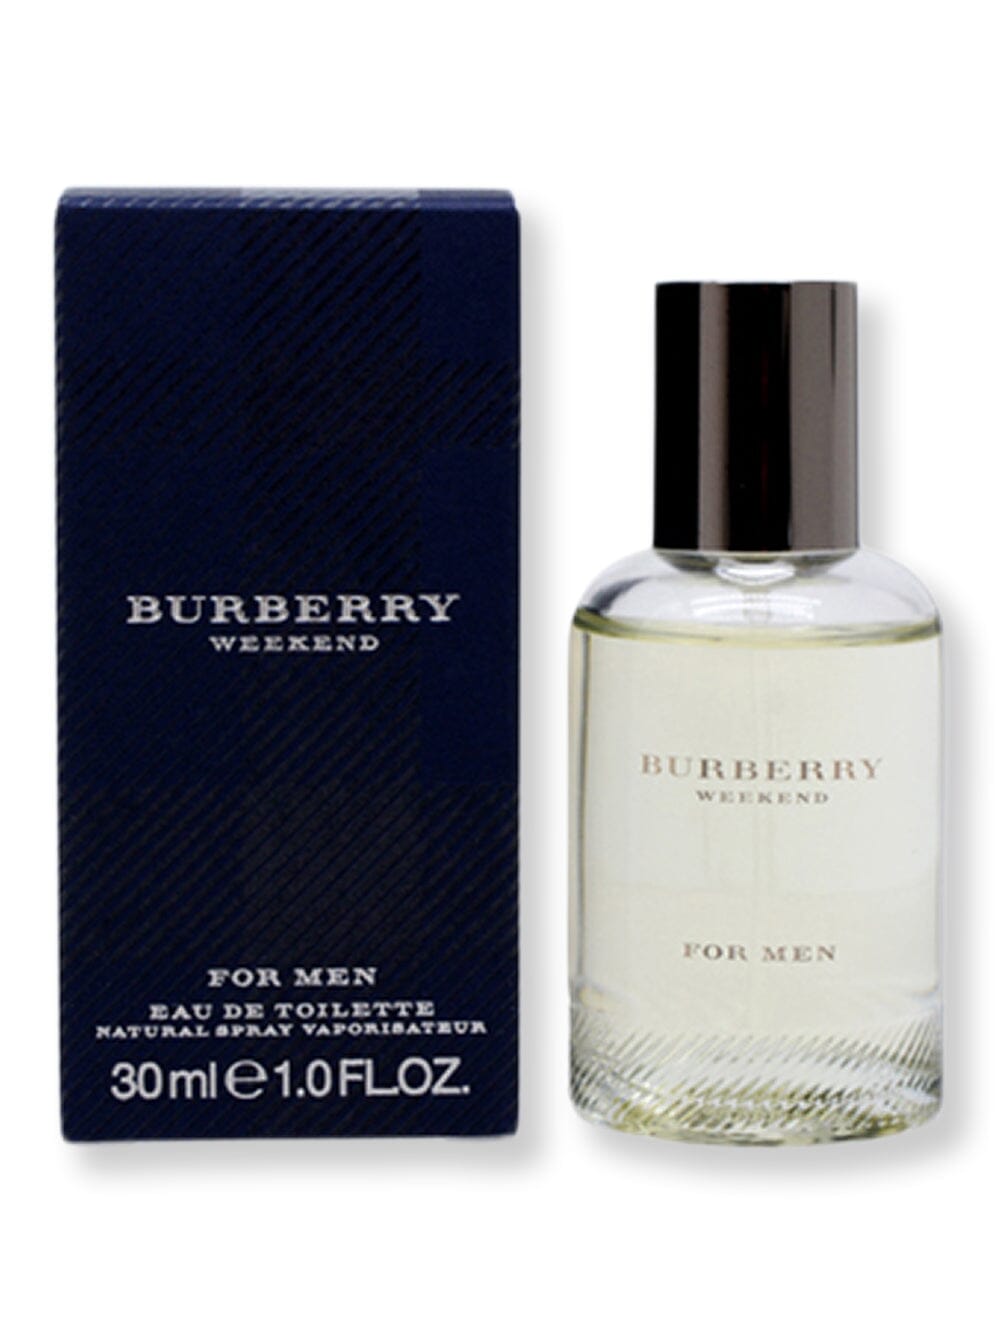 Burberry Burberry Weekend EDT Spray 1 oz Perfume 